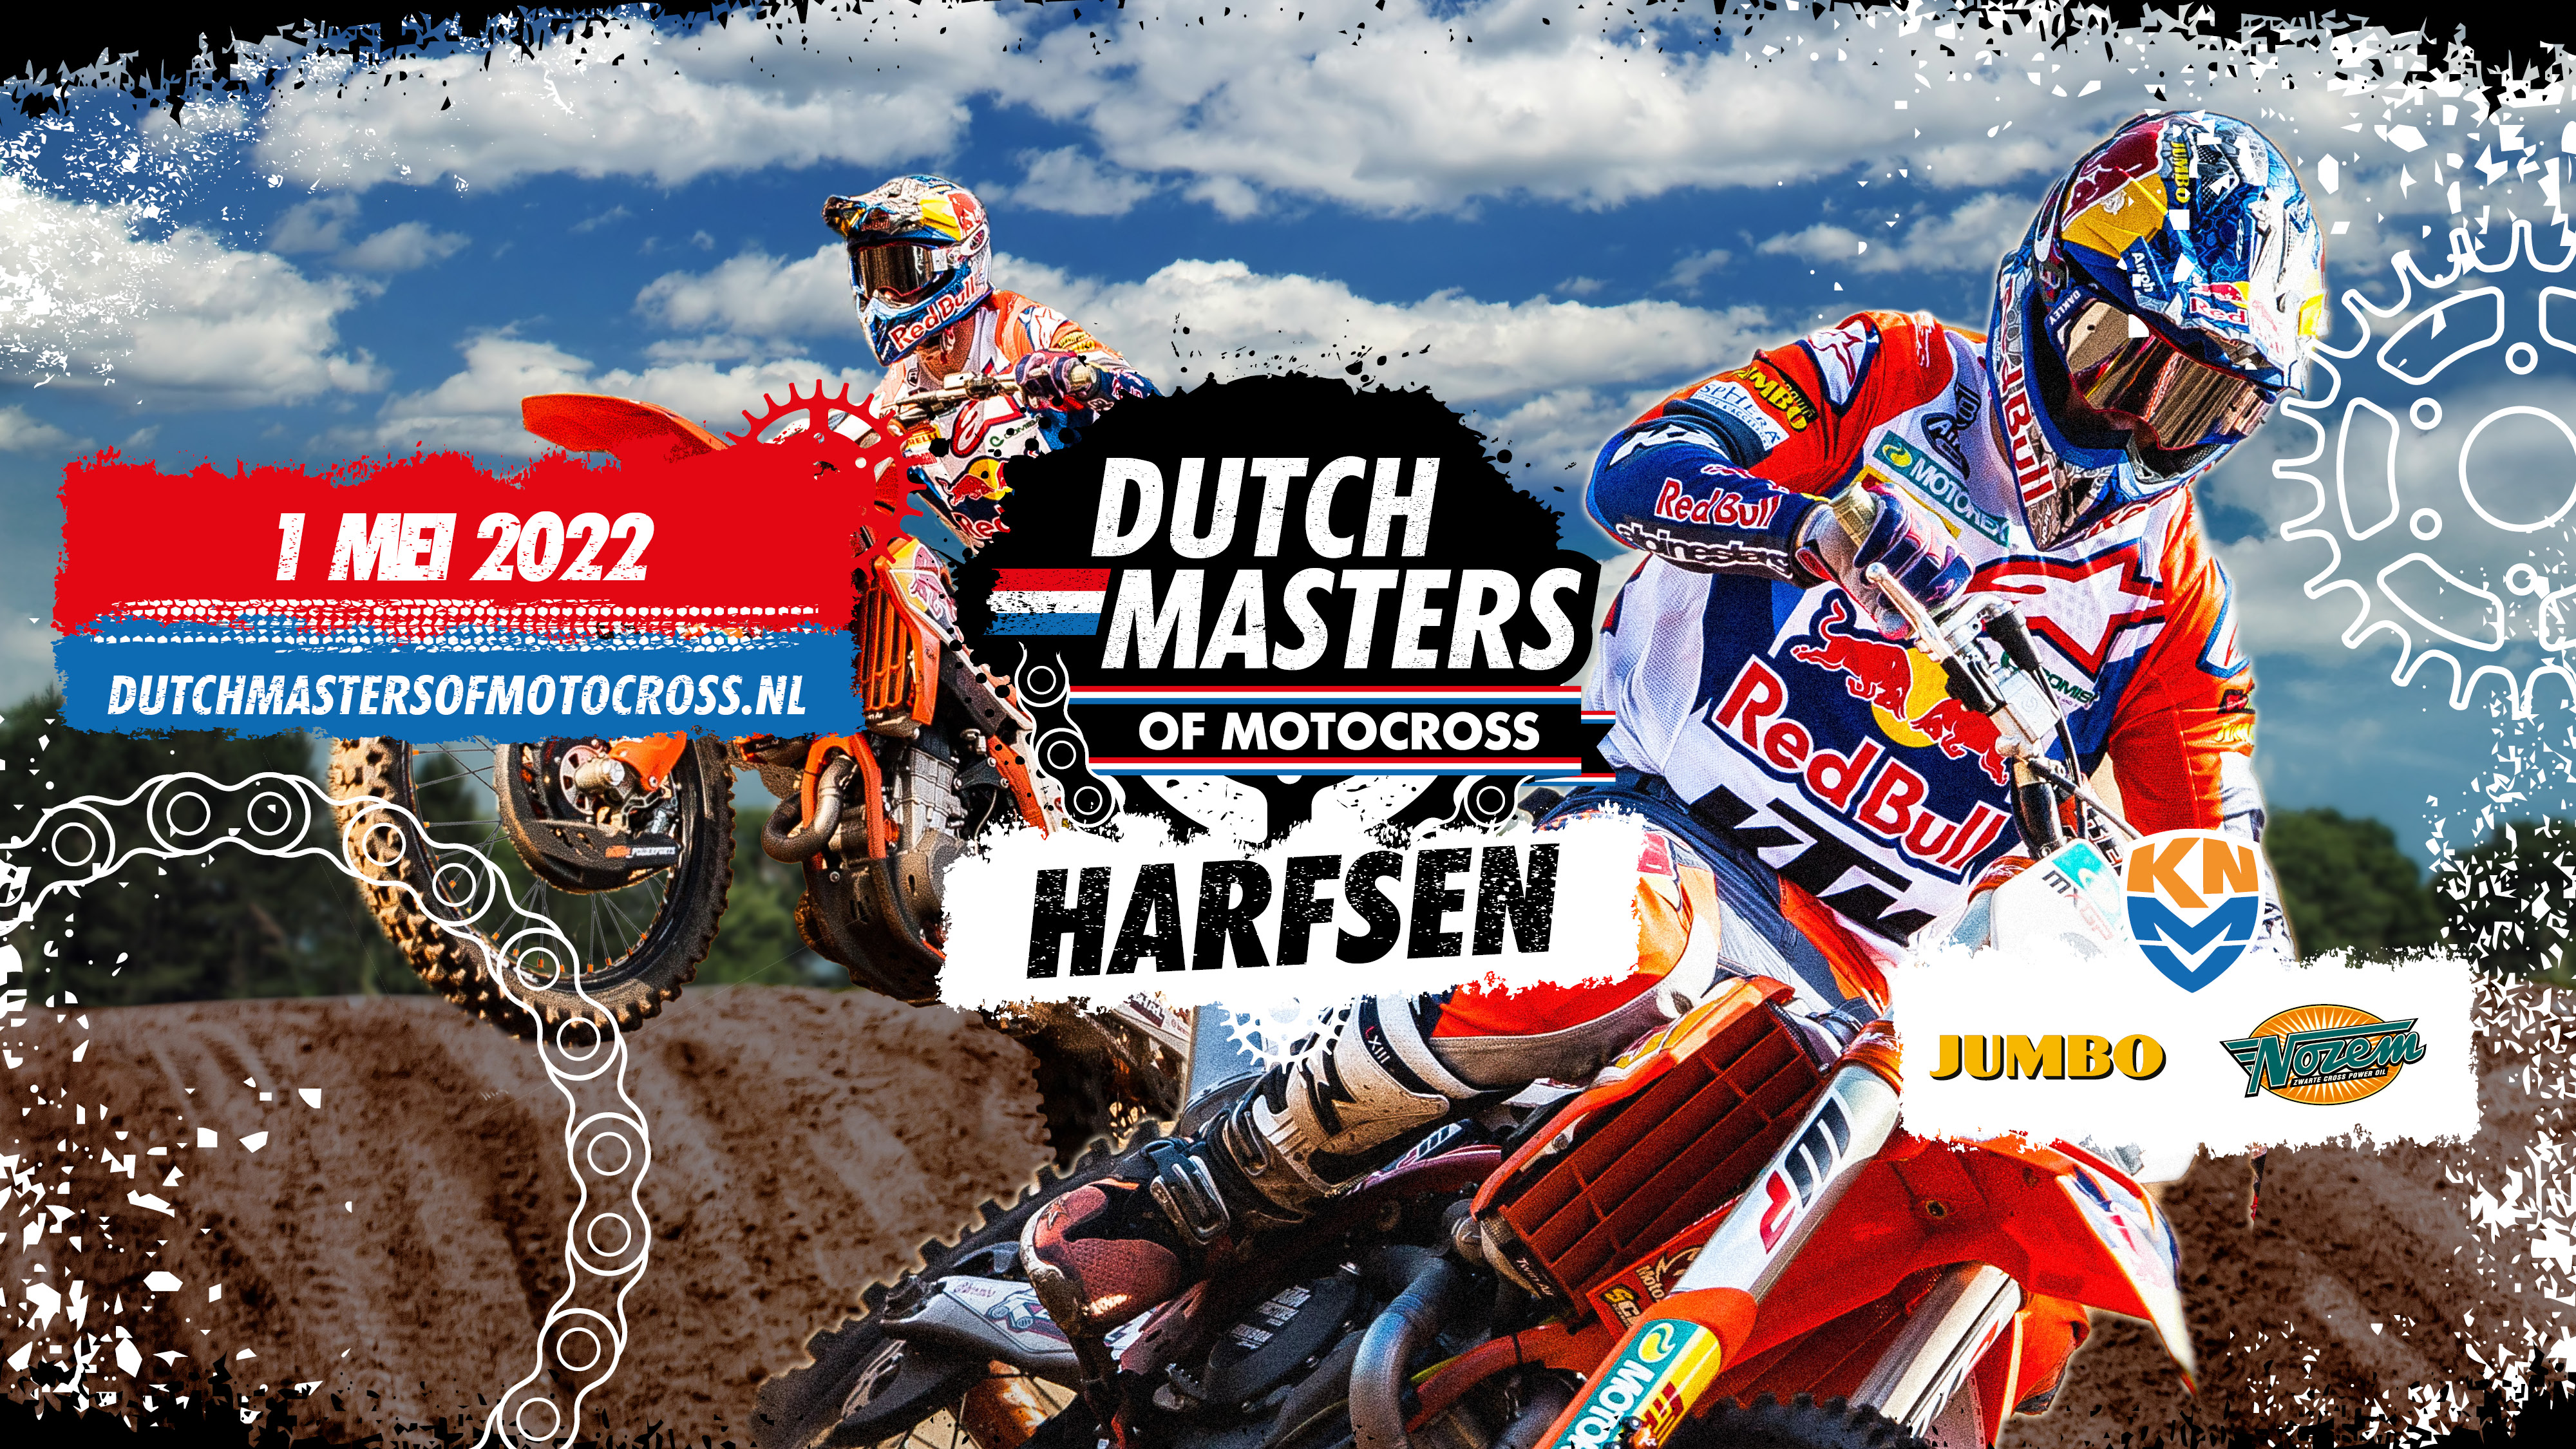 Dutch Masters Of Motocross '22 - Facebook Visual 1920x1080px Harfsen